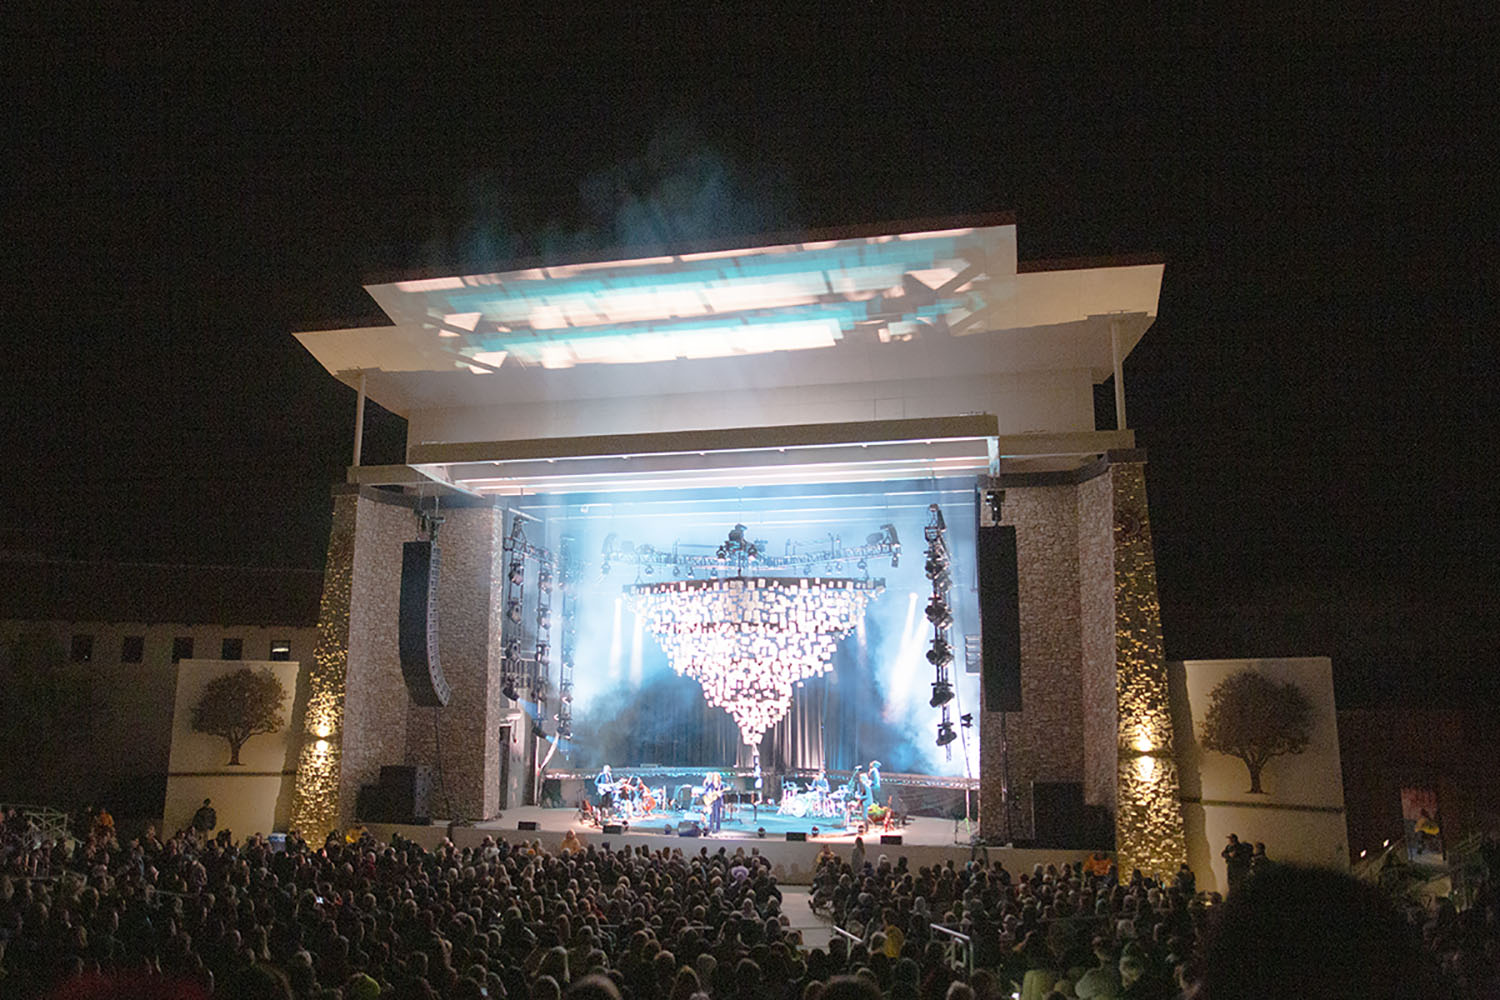 Vina Robles Amphitheatre Reschedules 2020 Concerts • Paso Robles Press